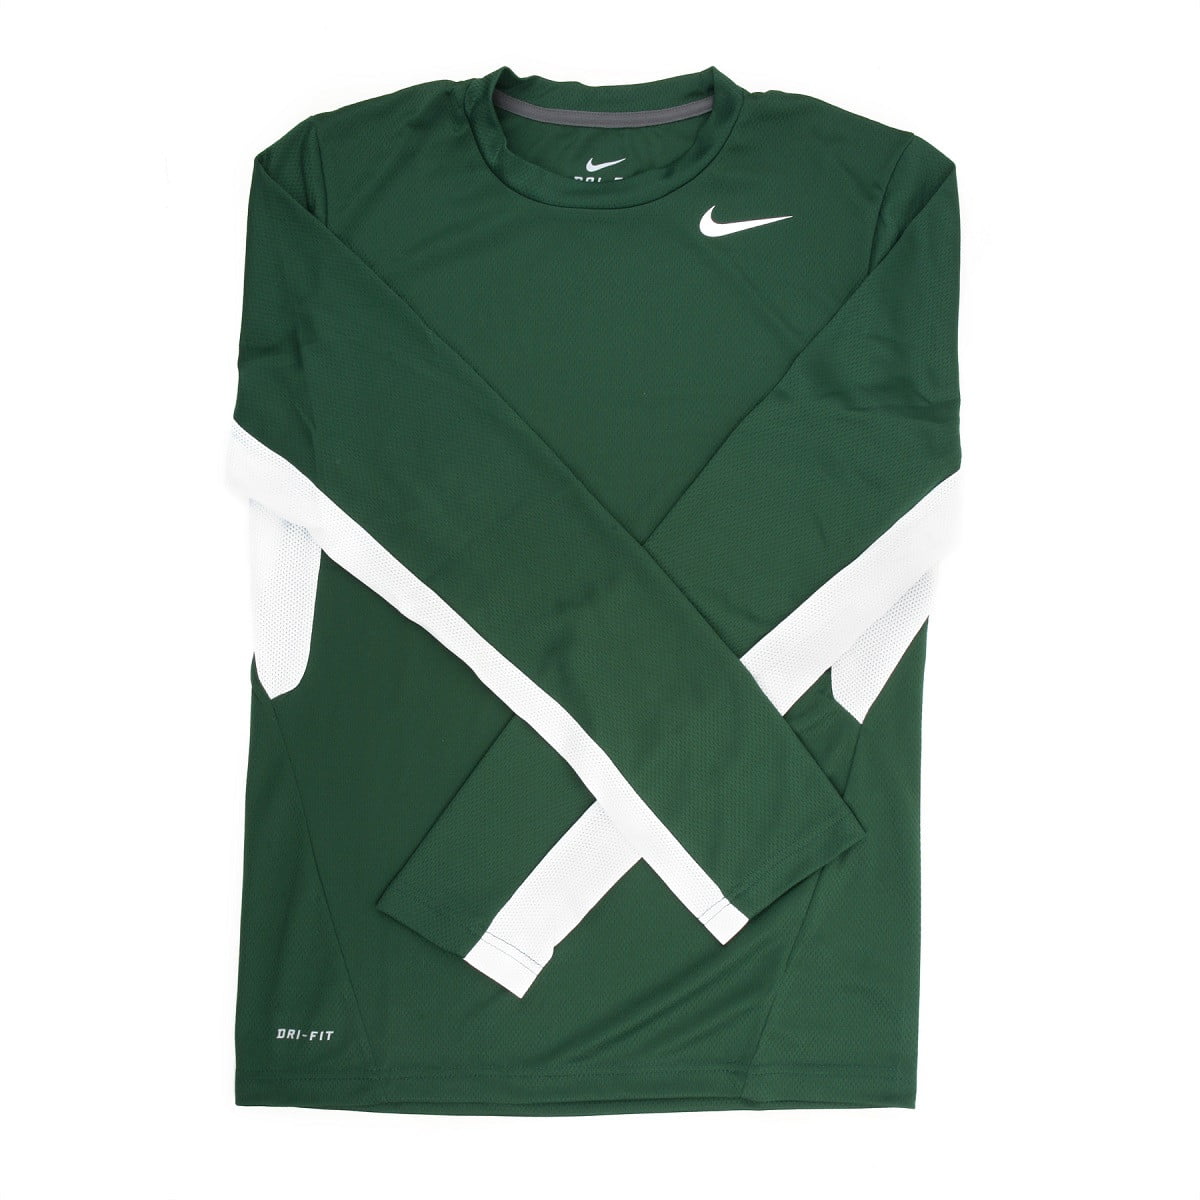 Nike Men's Vapor Green/White Dri-FIT Long Sleeve Training Shirt - 3X ...